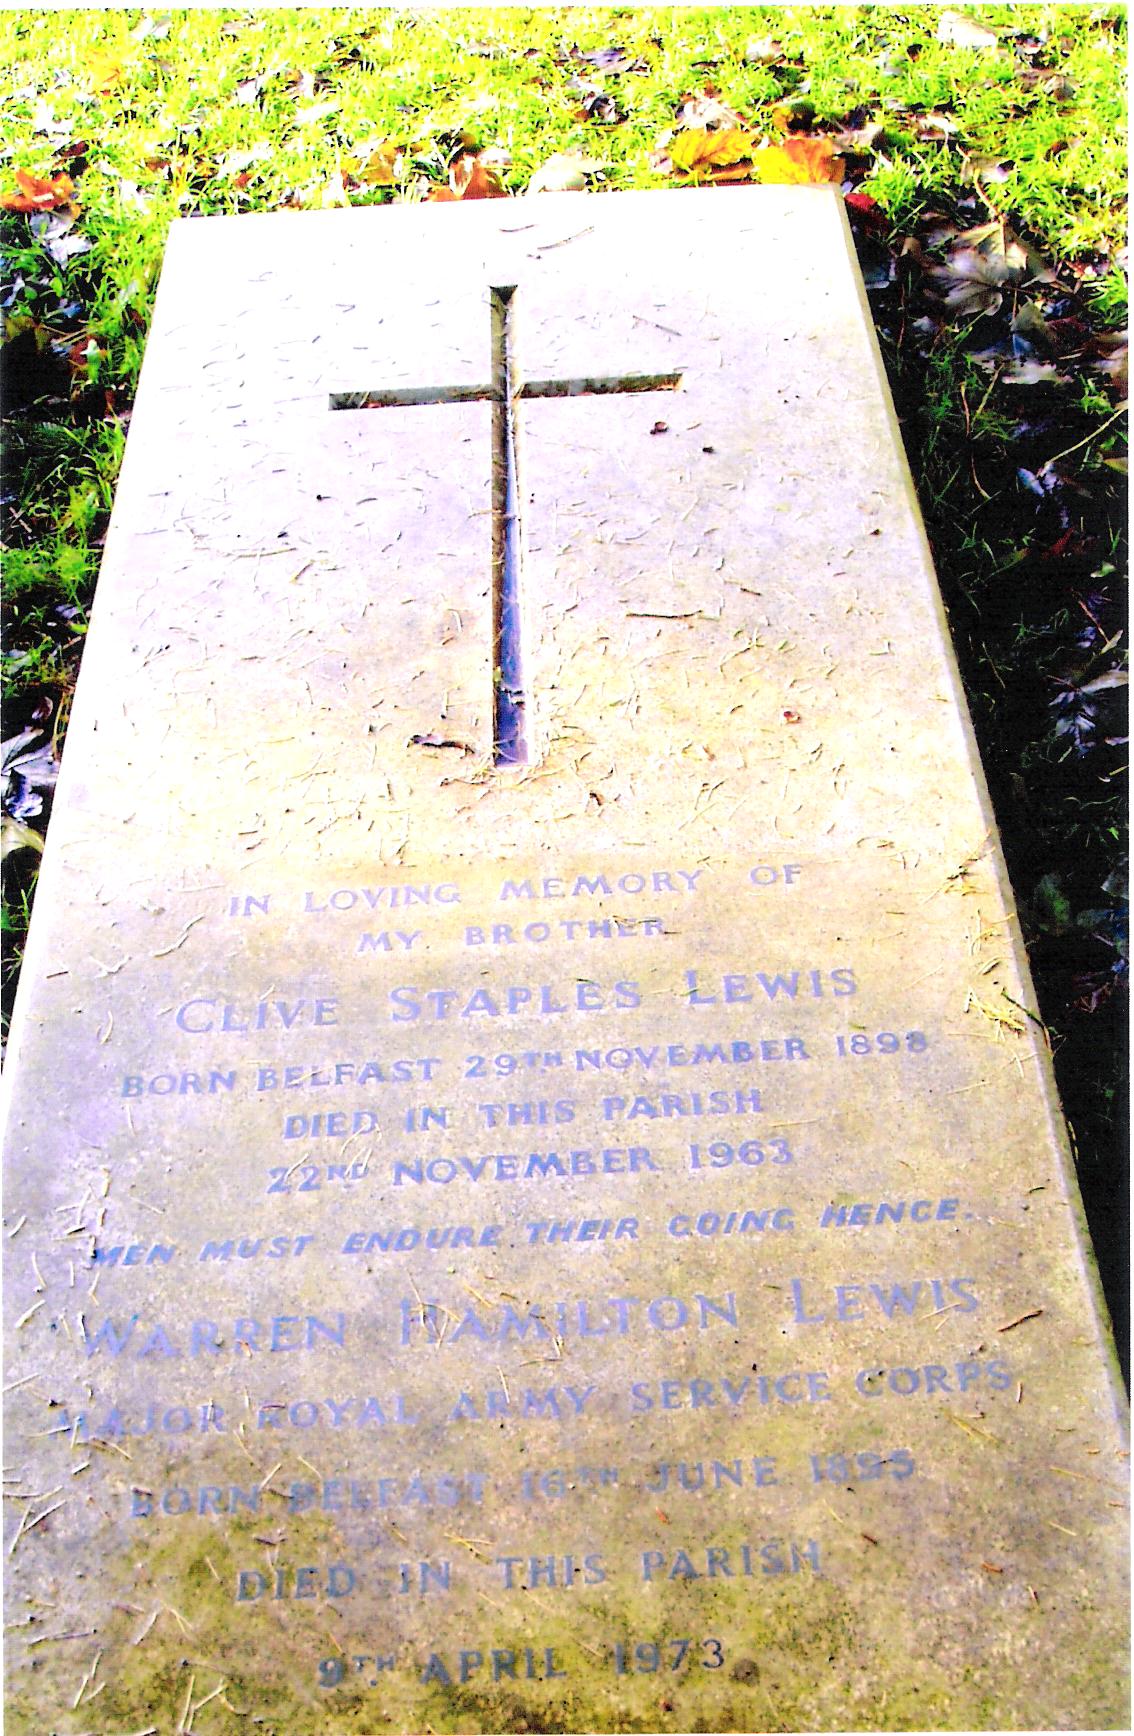 C.S. Lewis's gravesite